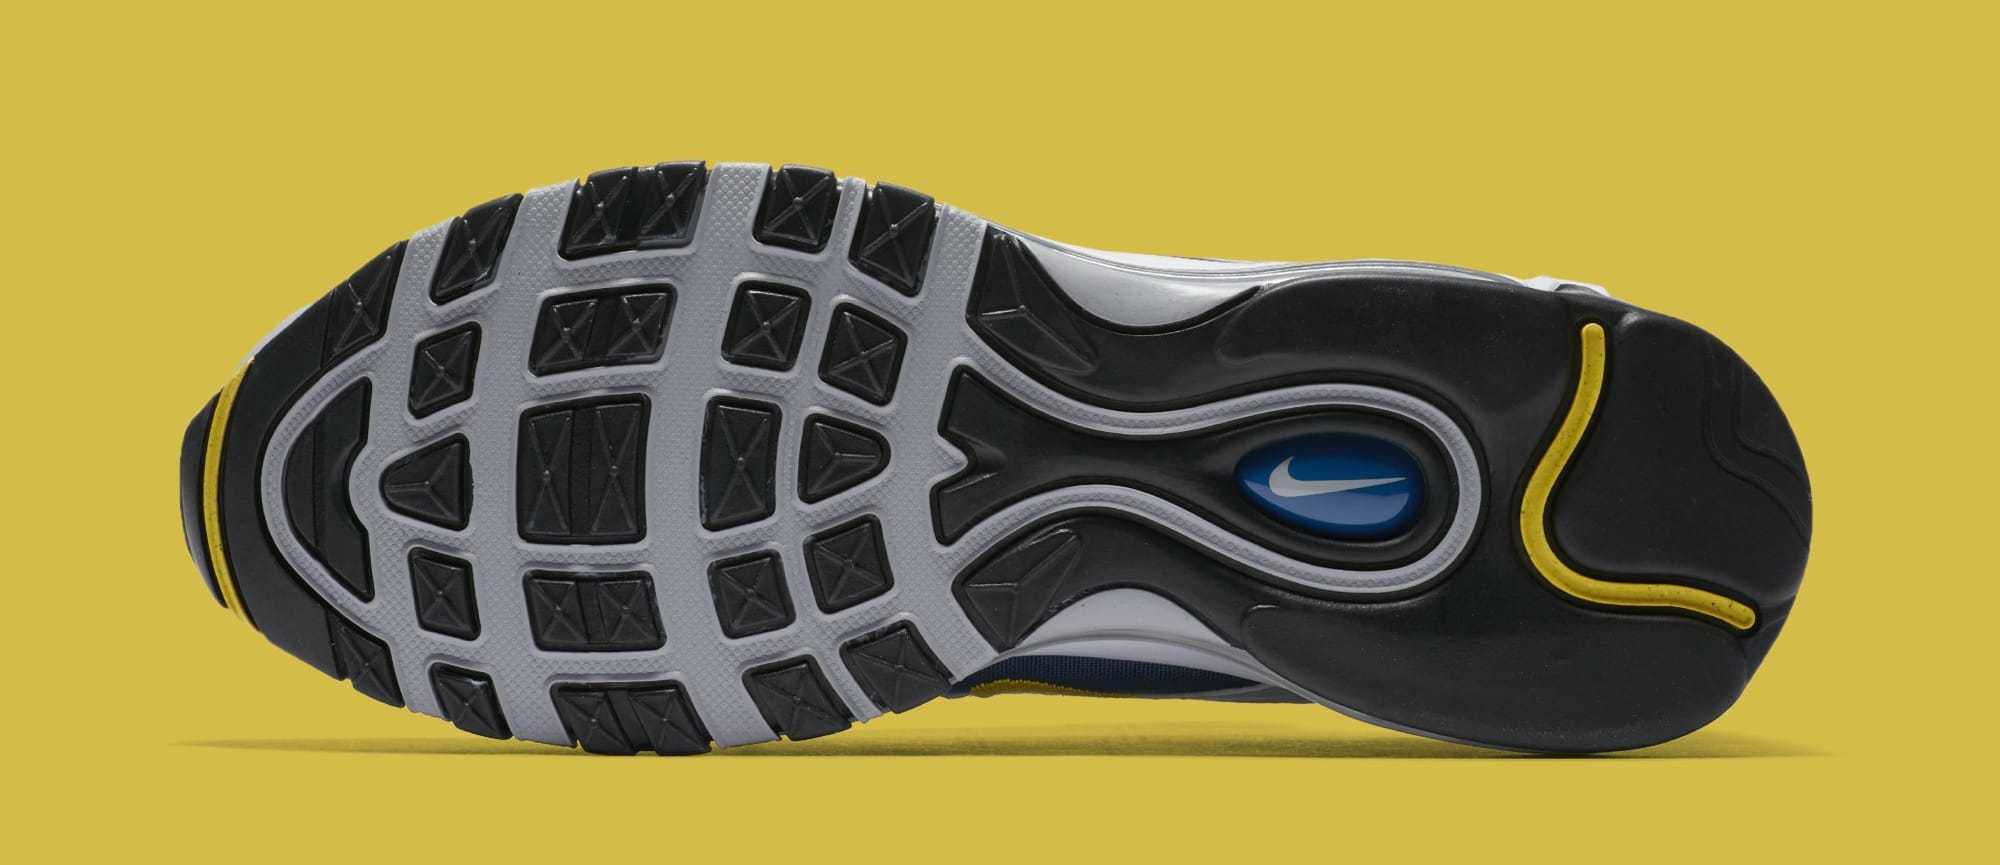 Nike Air Max 97 &#x27;Wolf Grey/Tour Yellow/Gym Blue&#x27; 921826-006 (Sole)